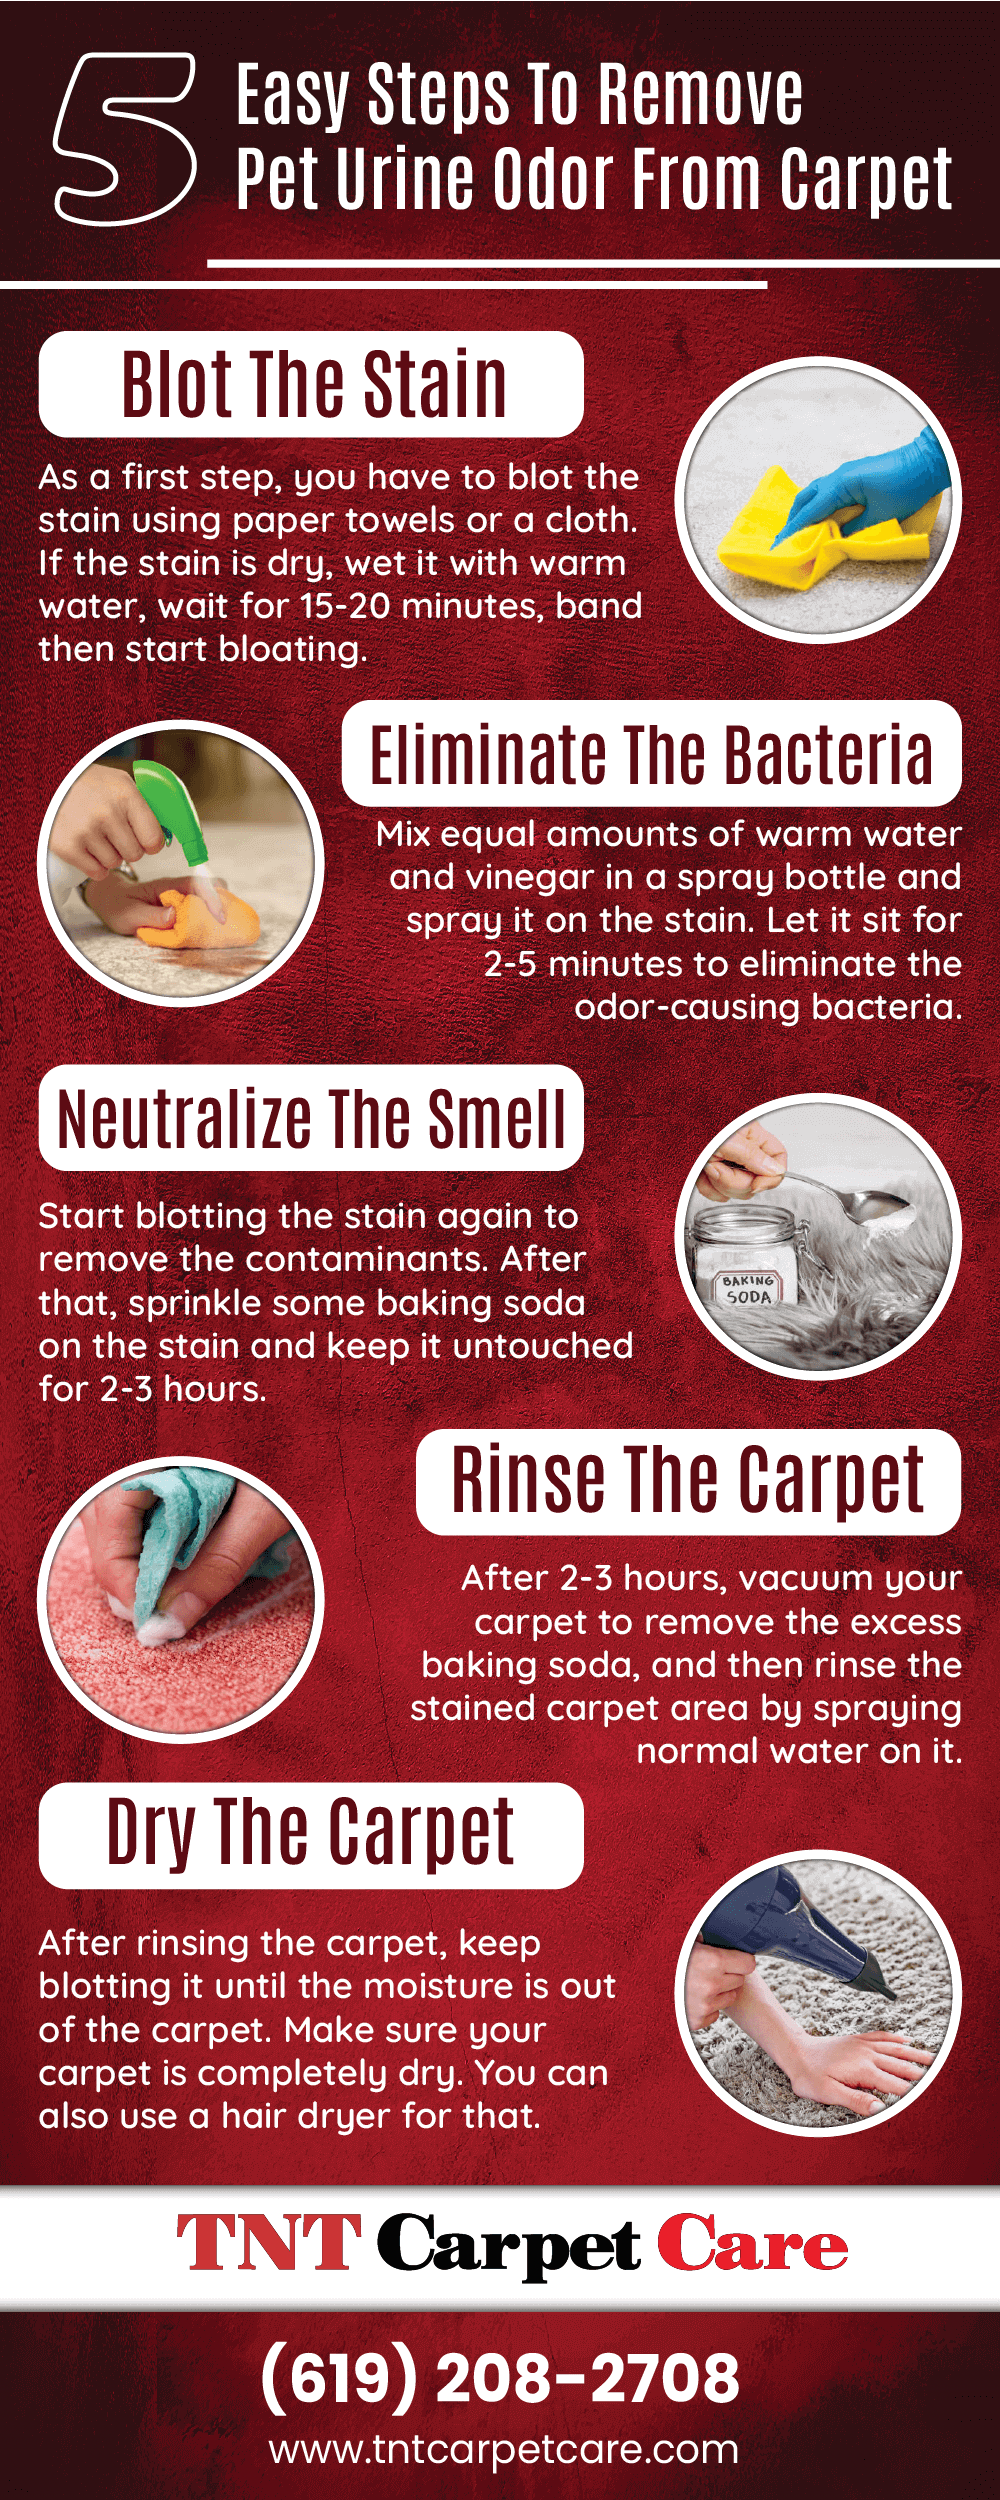 5 Easy Steps To Remove Pet Urine Odor From Carpet